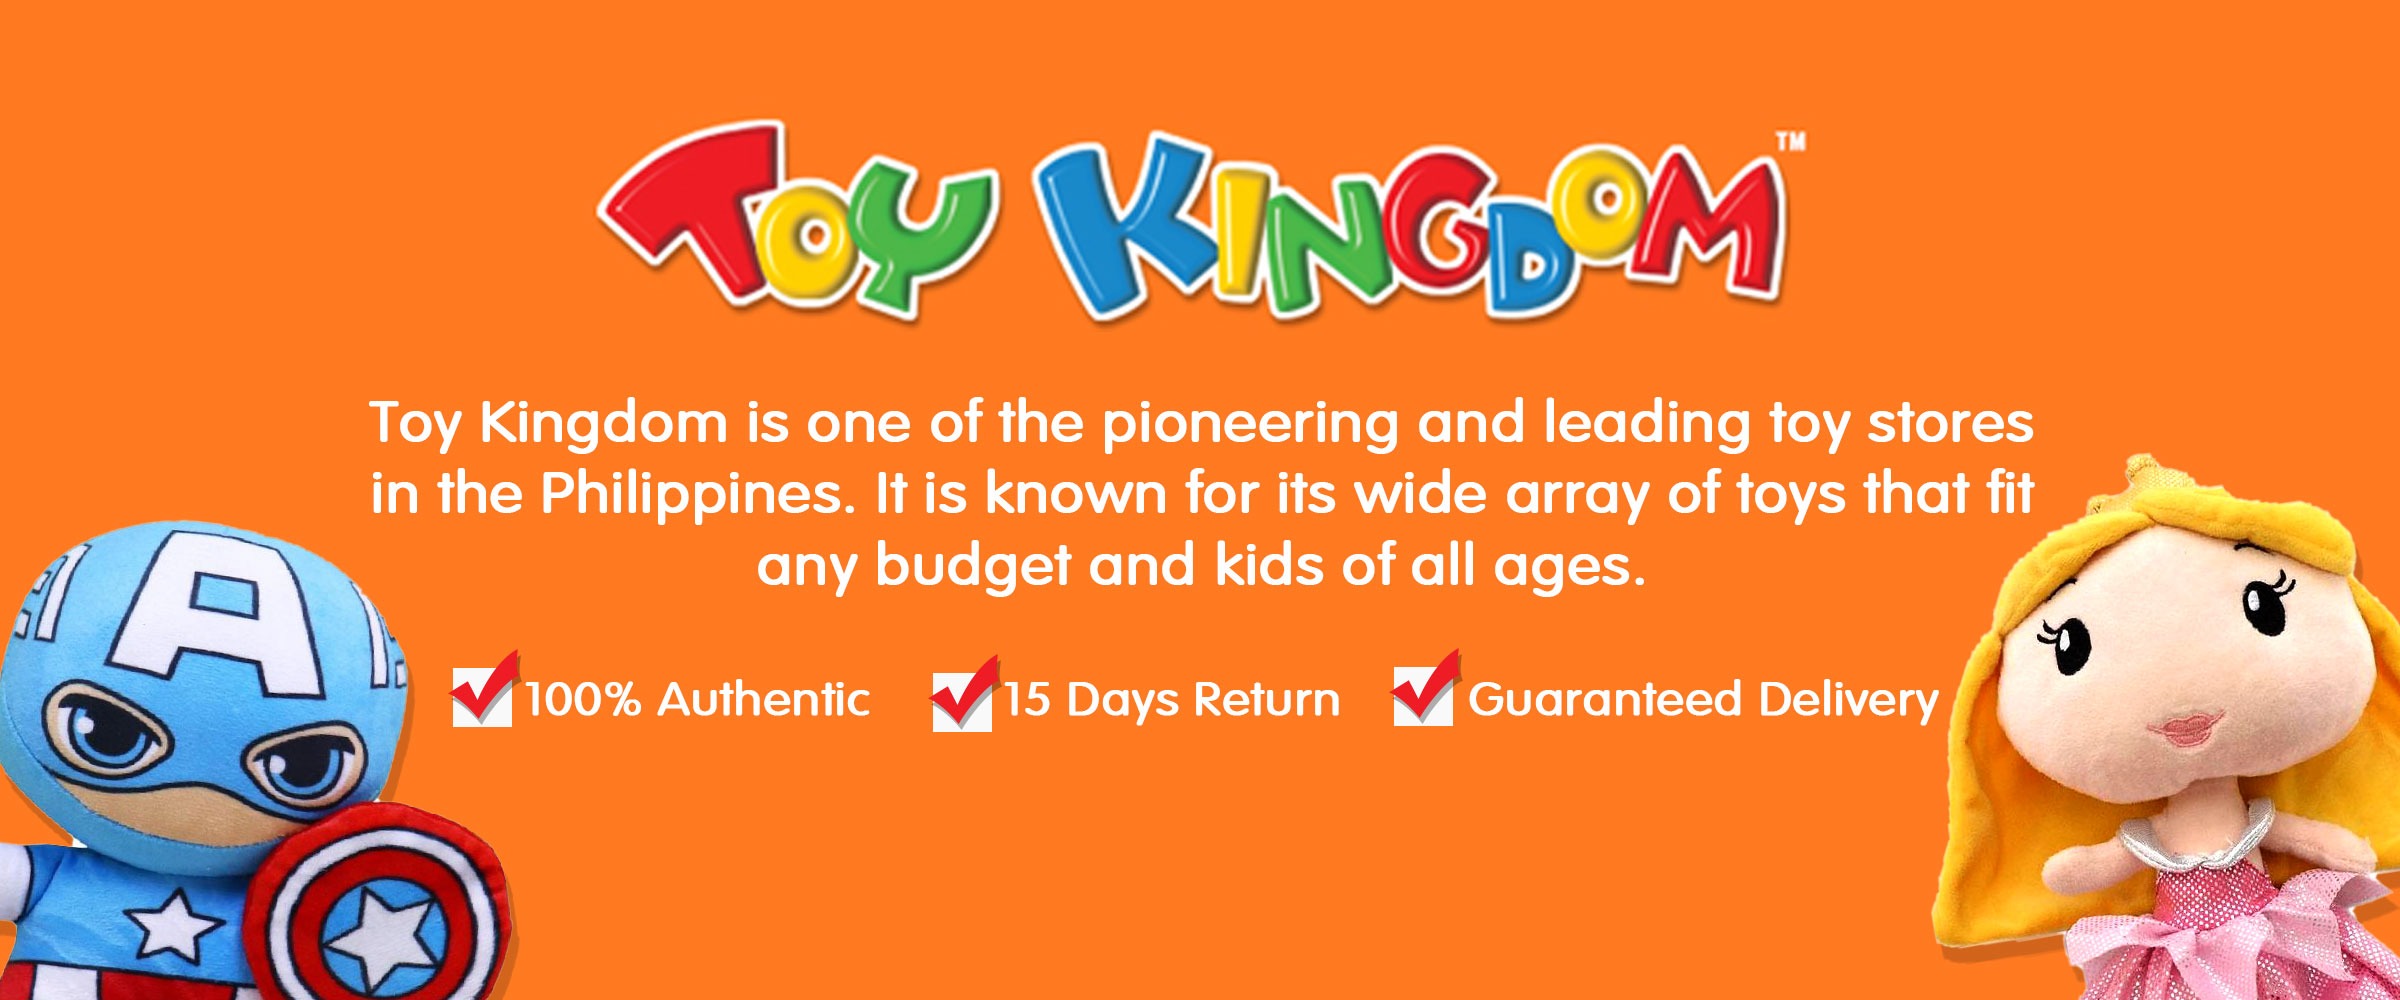 toy kingdom installment